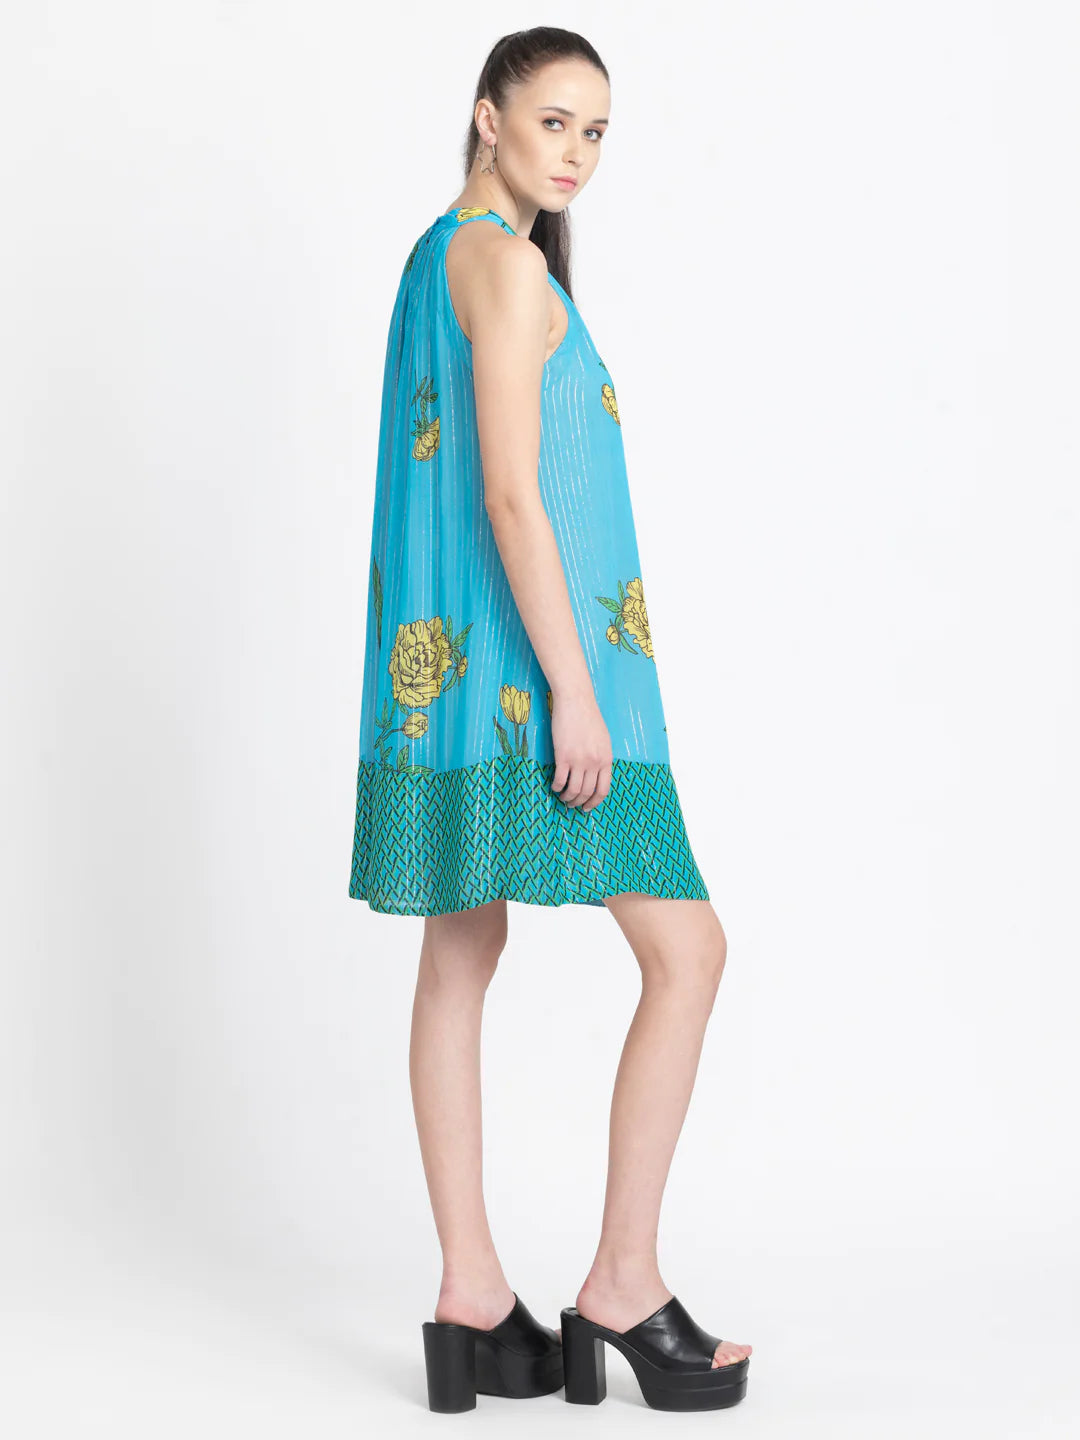 Blue Halter Dress for Women | Casual Chic Blue Halter Dress